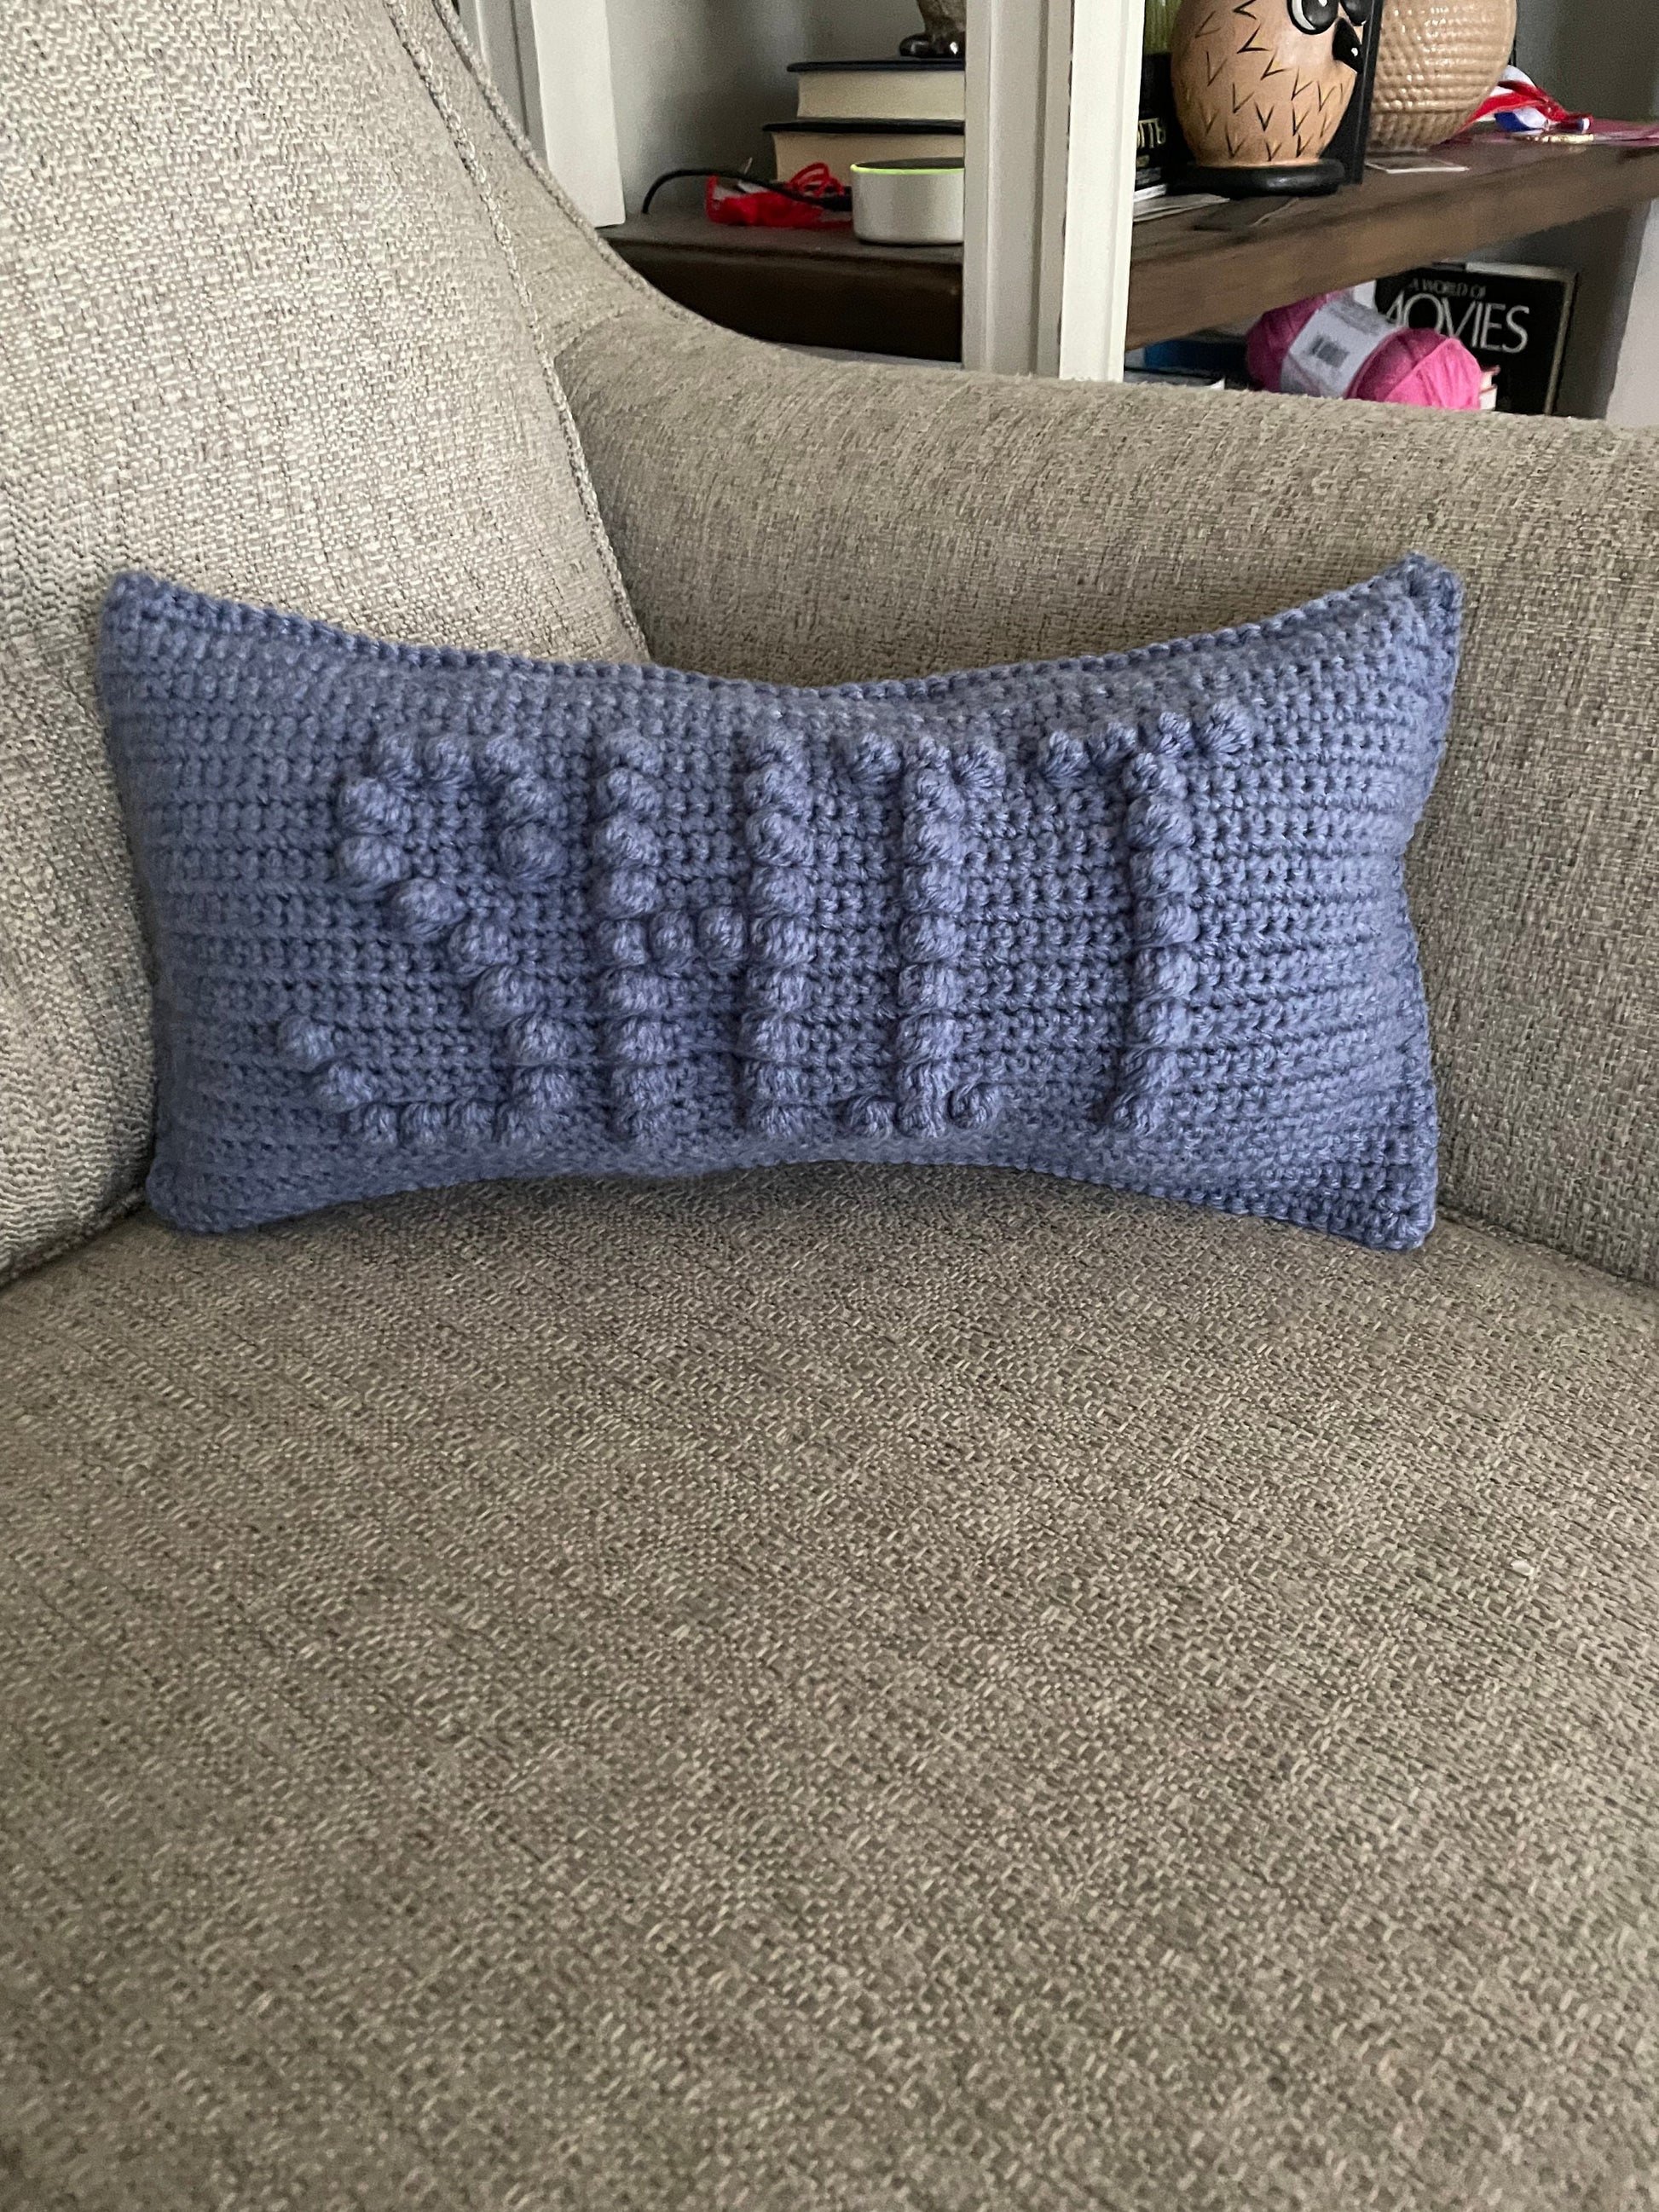 Crochet Pillow.. the ergonomic kind : r/crochet